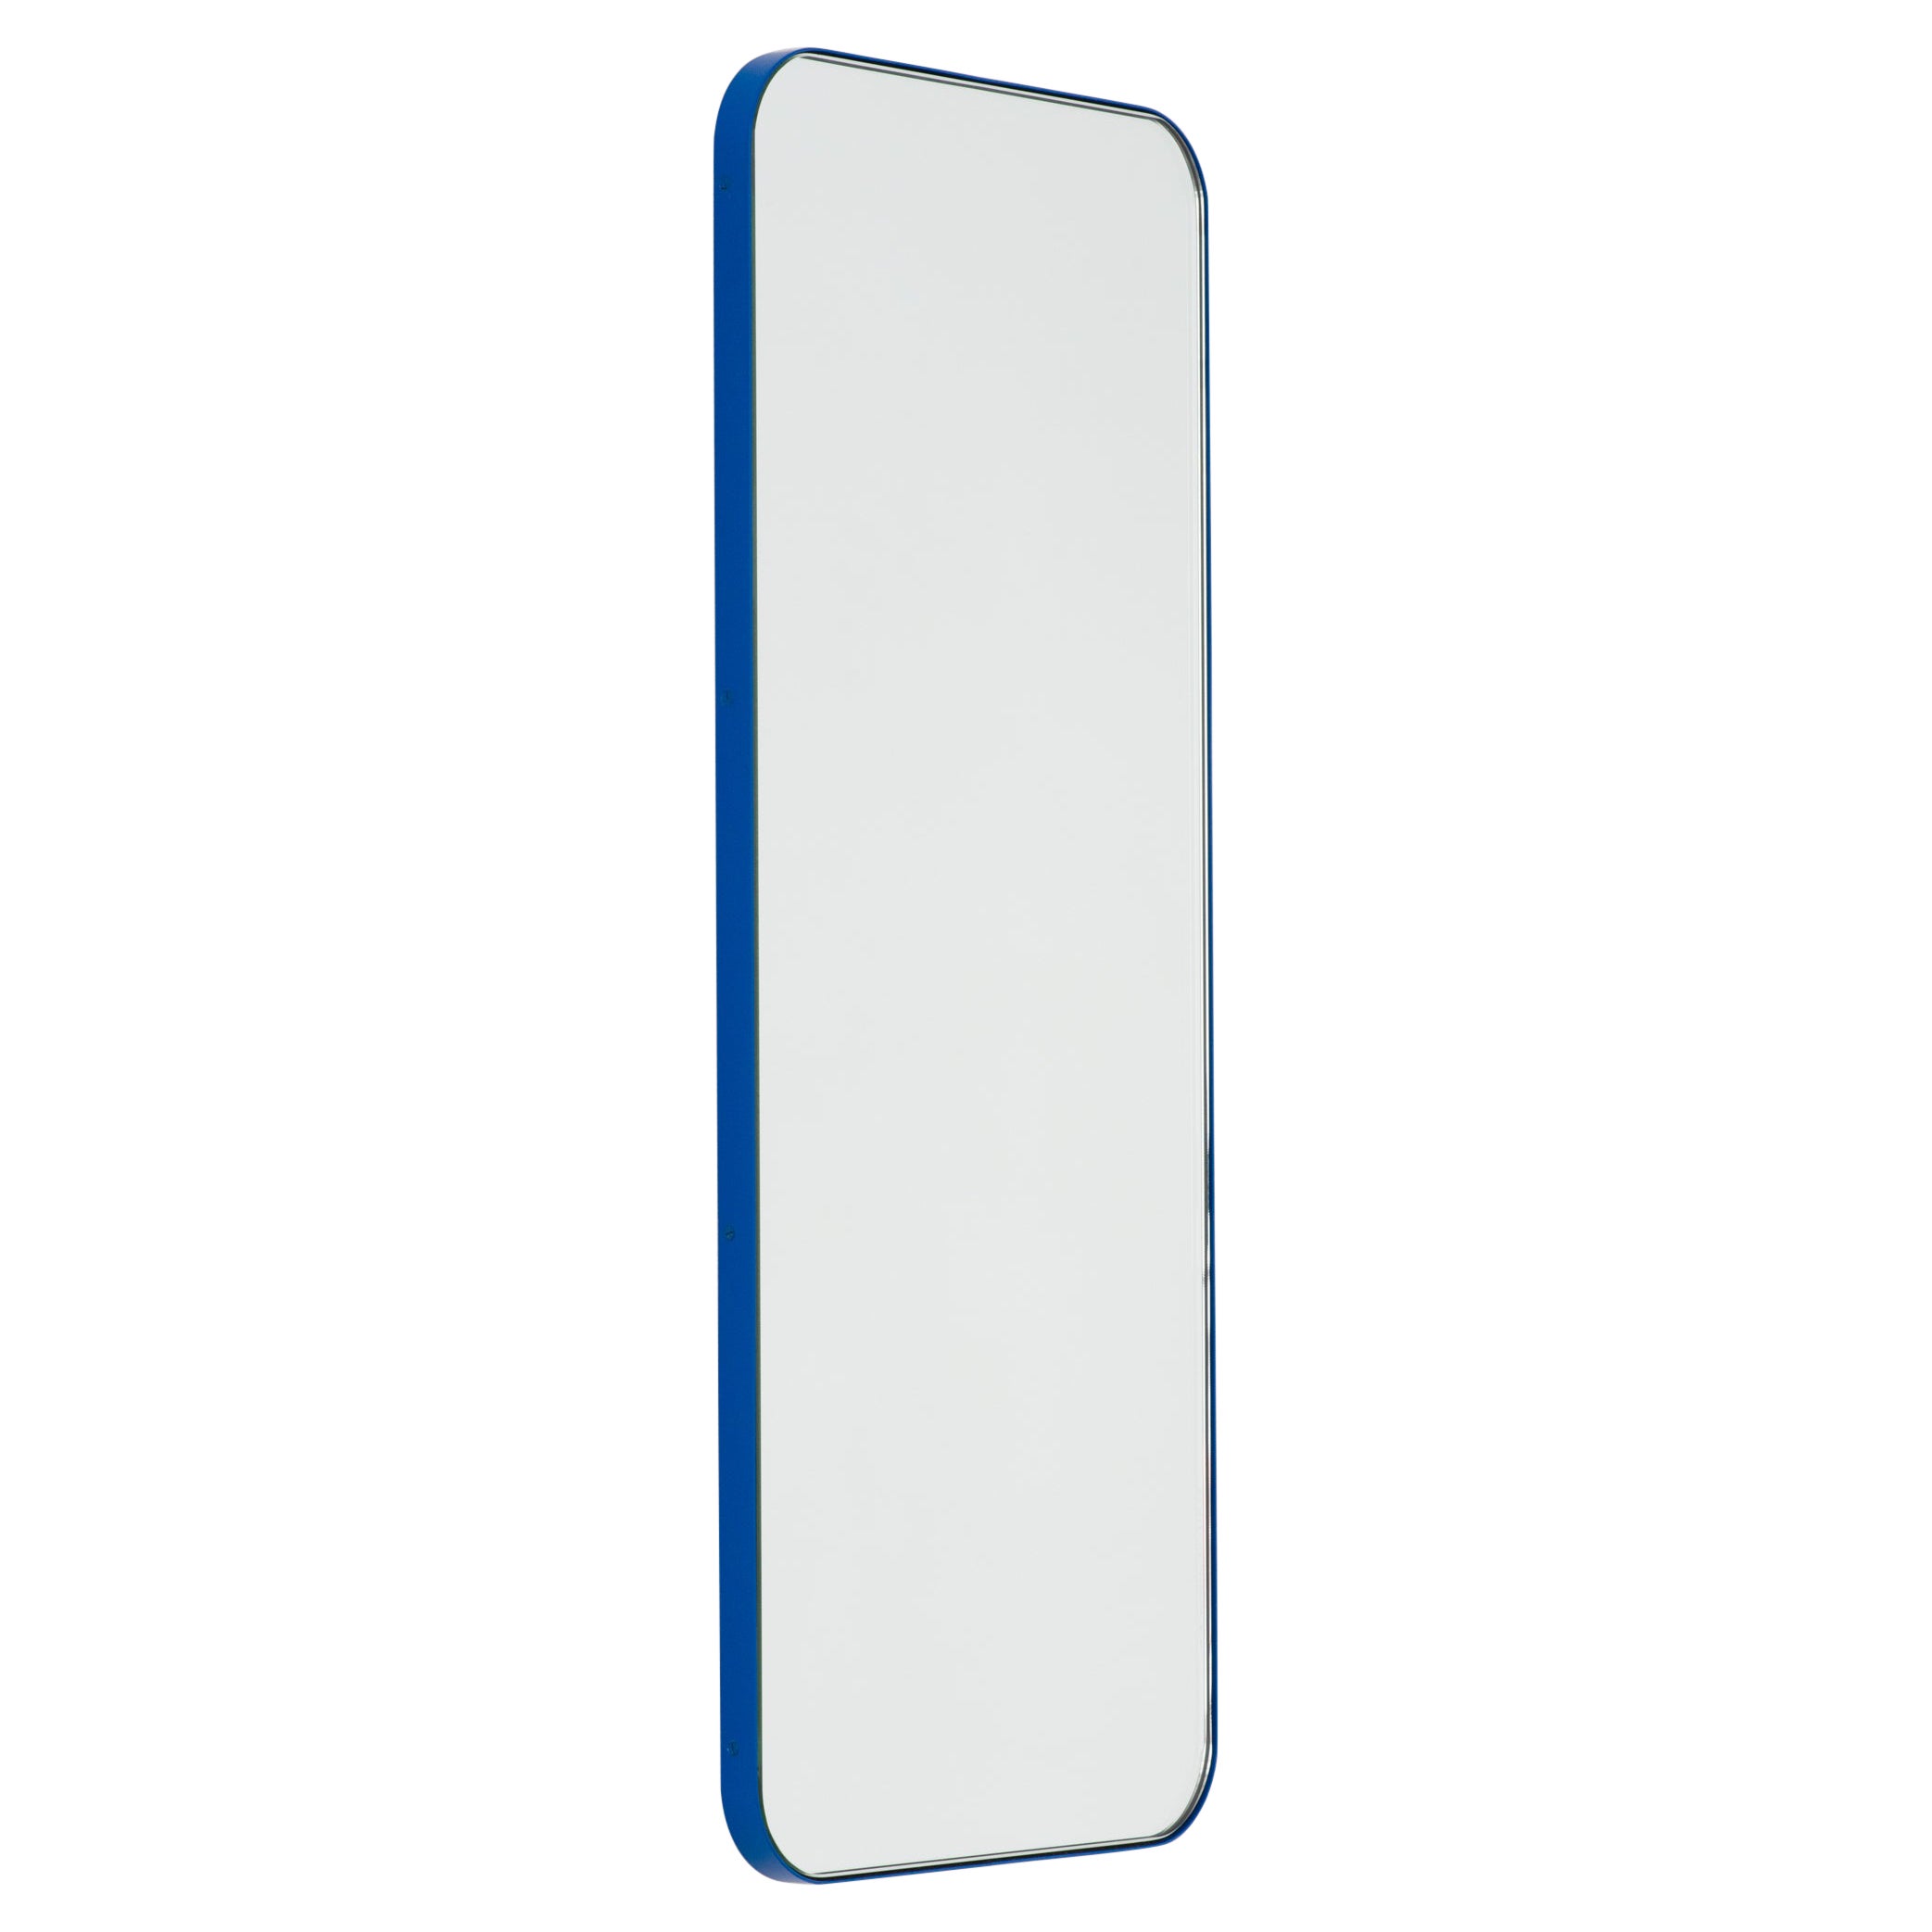 Quadris Rectangular Modern Mirror with a Blue Frame, Small